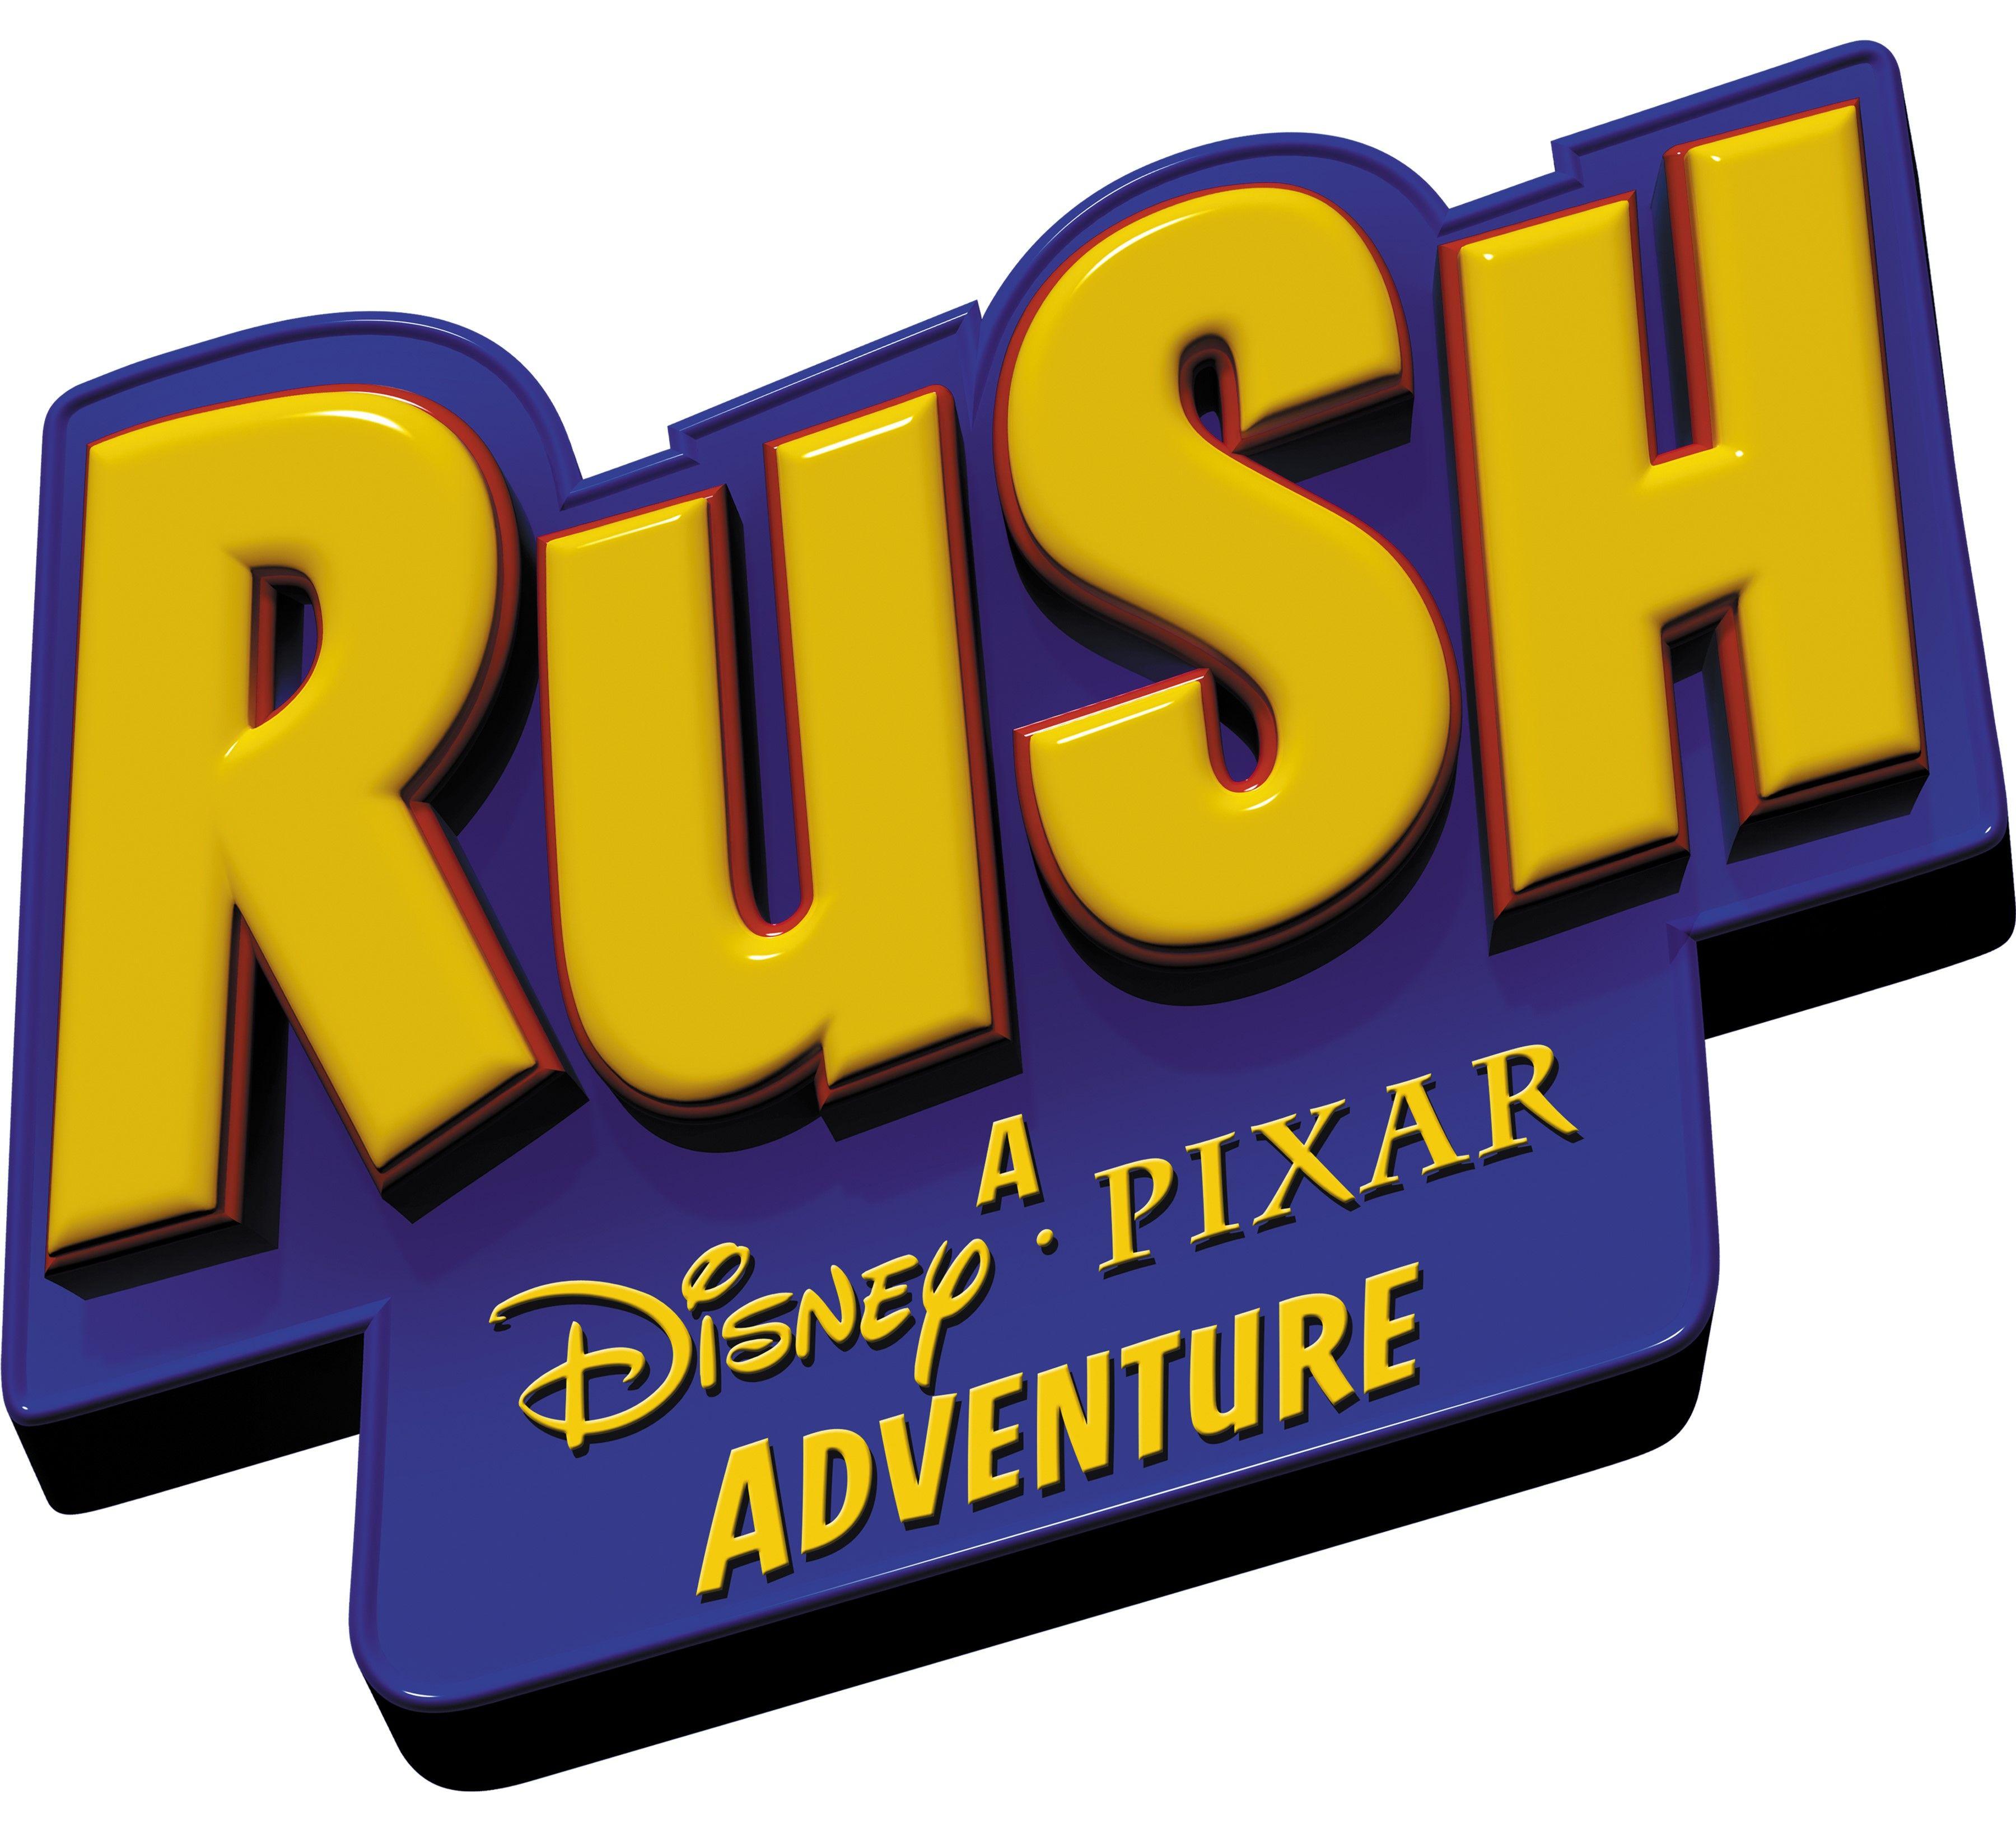 Disney Pixar Logo - Rush: A Disney·Pixar Adventure Q&A